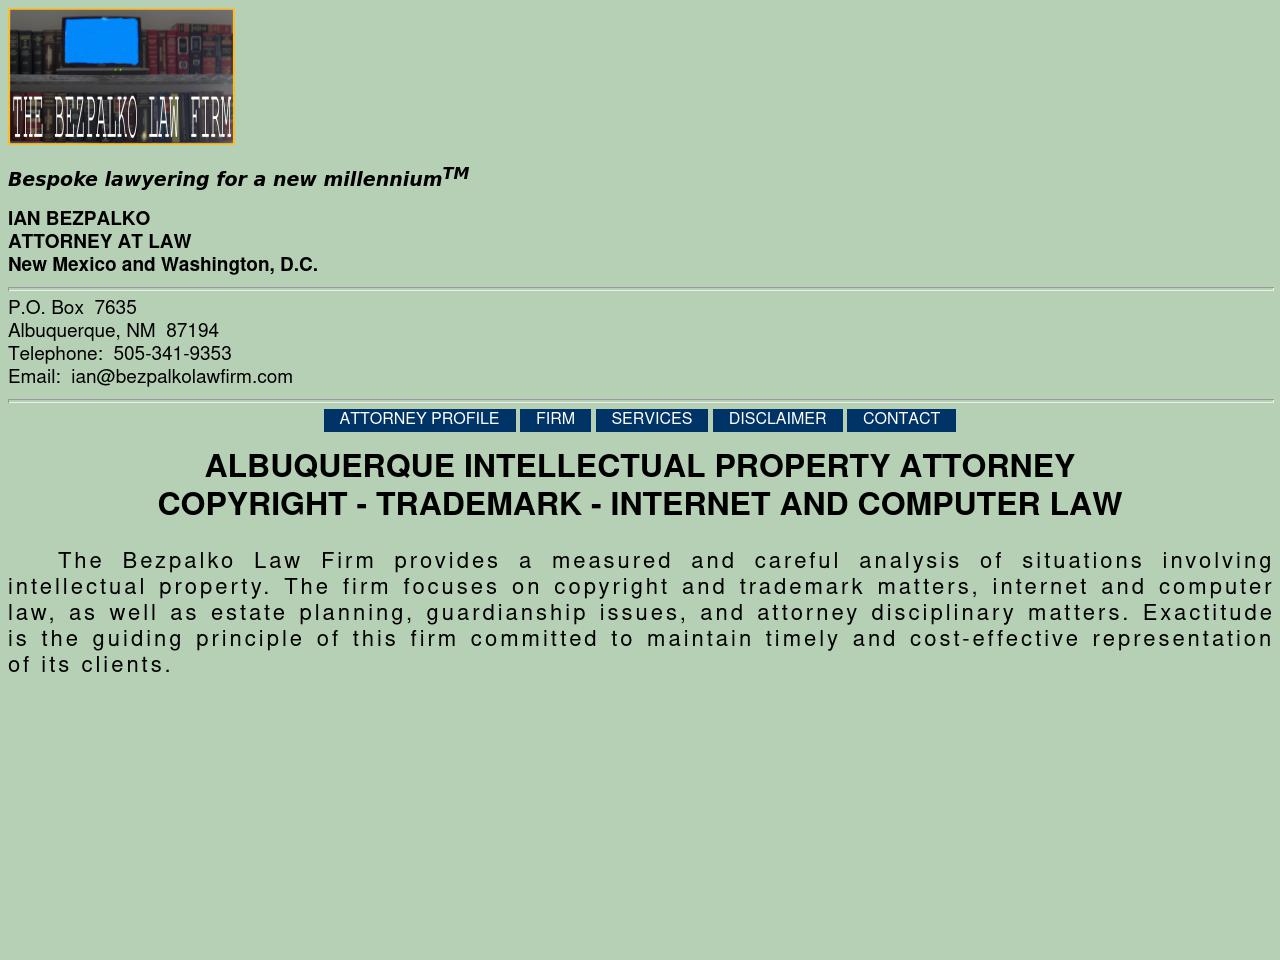 Bezpalko Law Firm - Albuquerque NM Lawyers